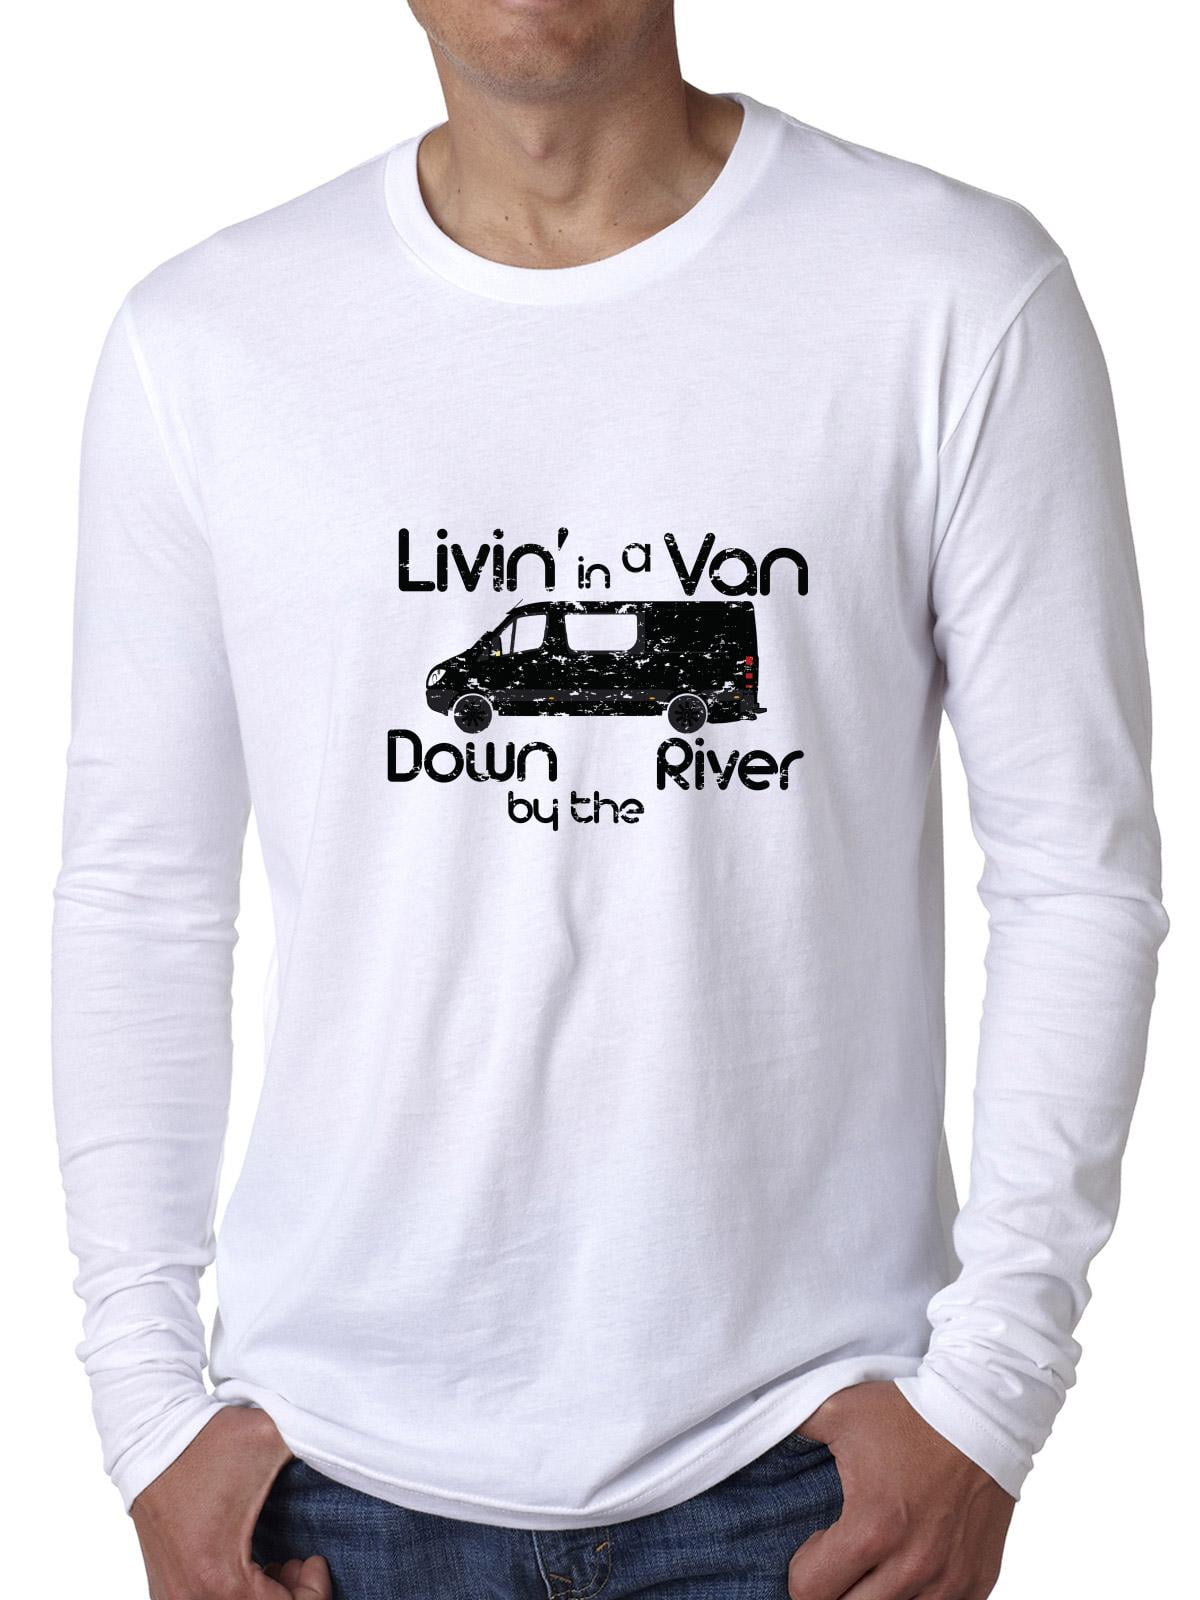 van down by the river shirt